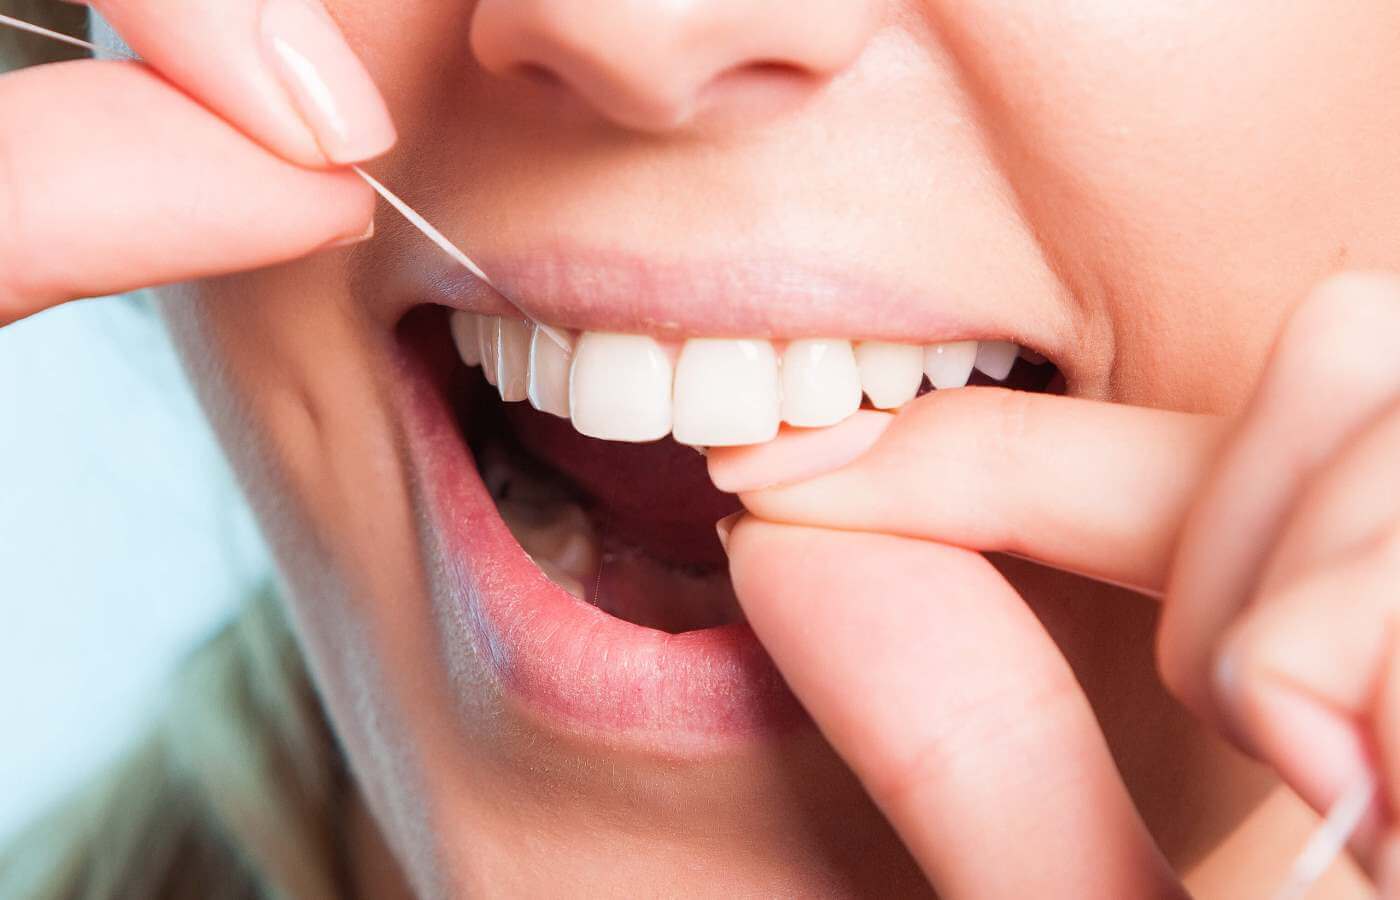 Importance of using dental floss